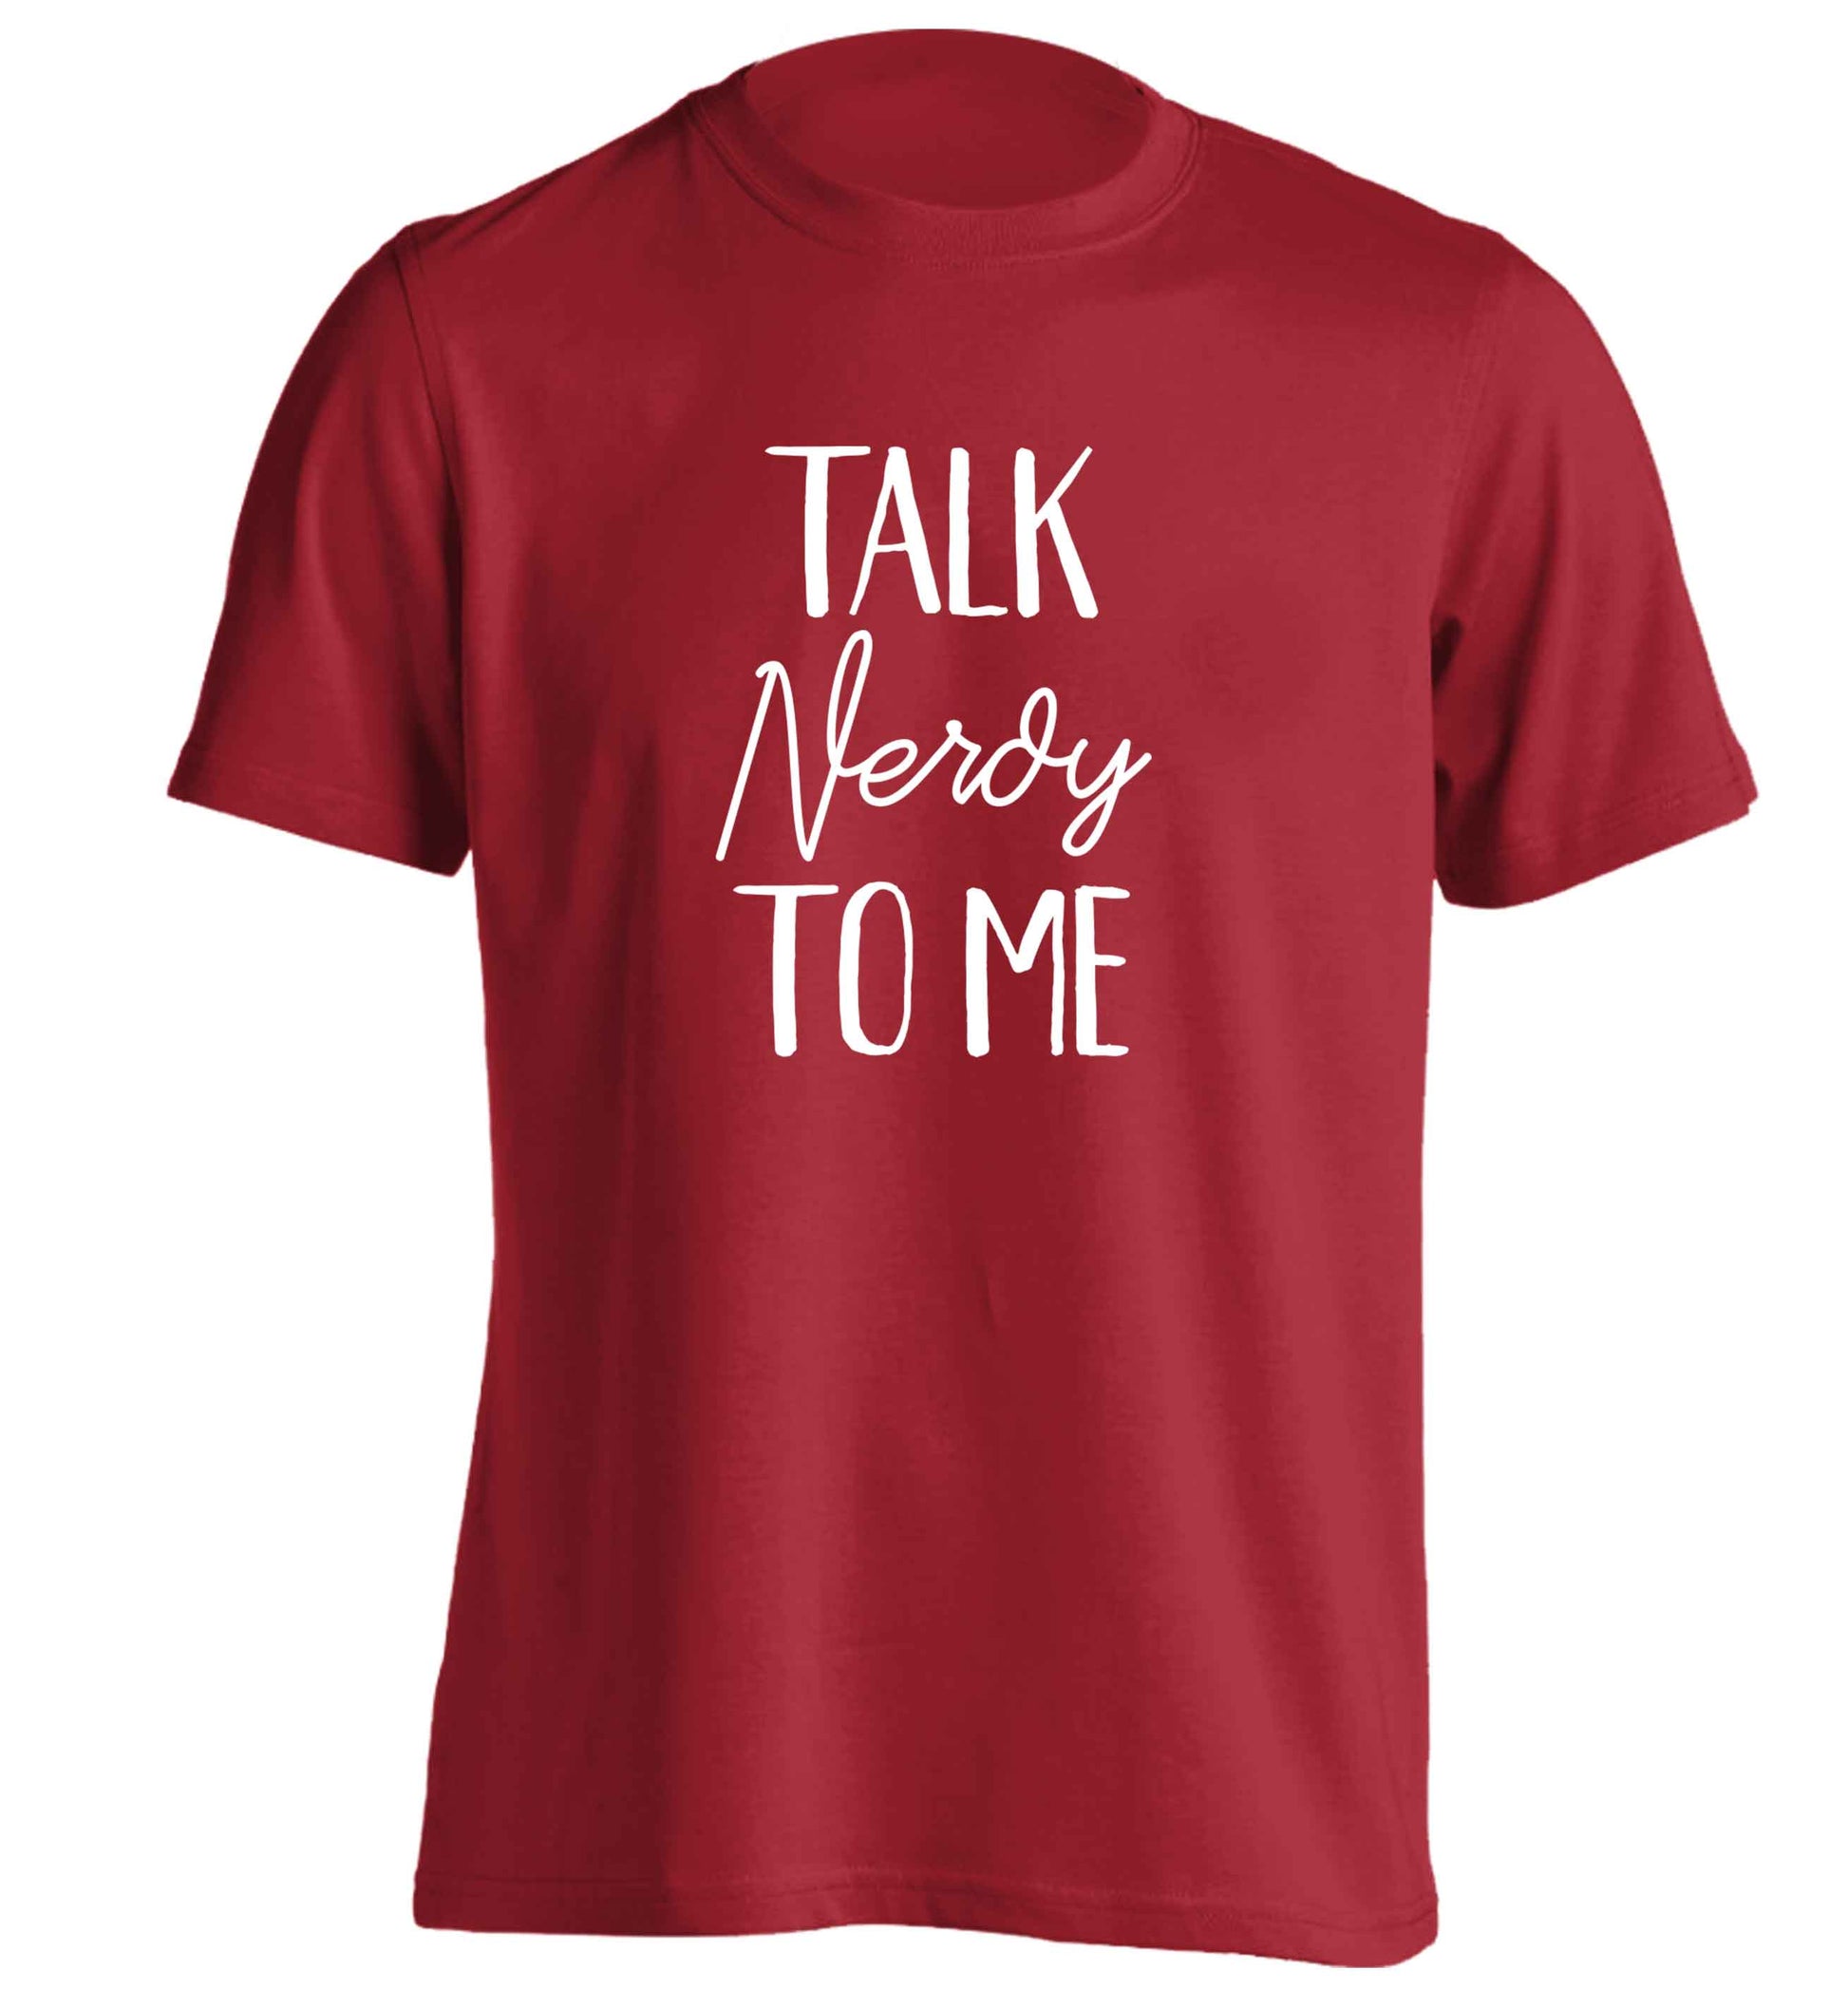 Talk nerdy to me adults unisex red Tshirt 2XL